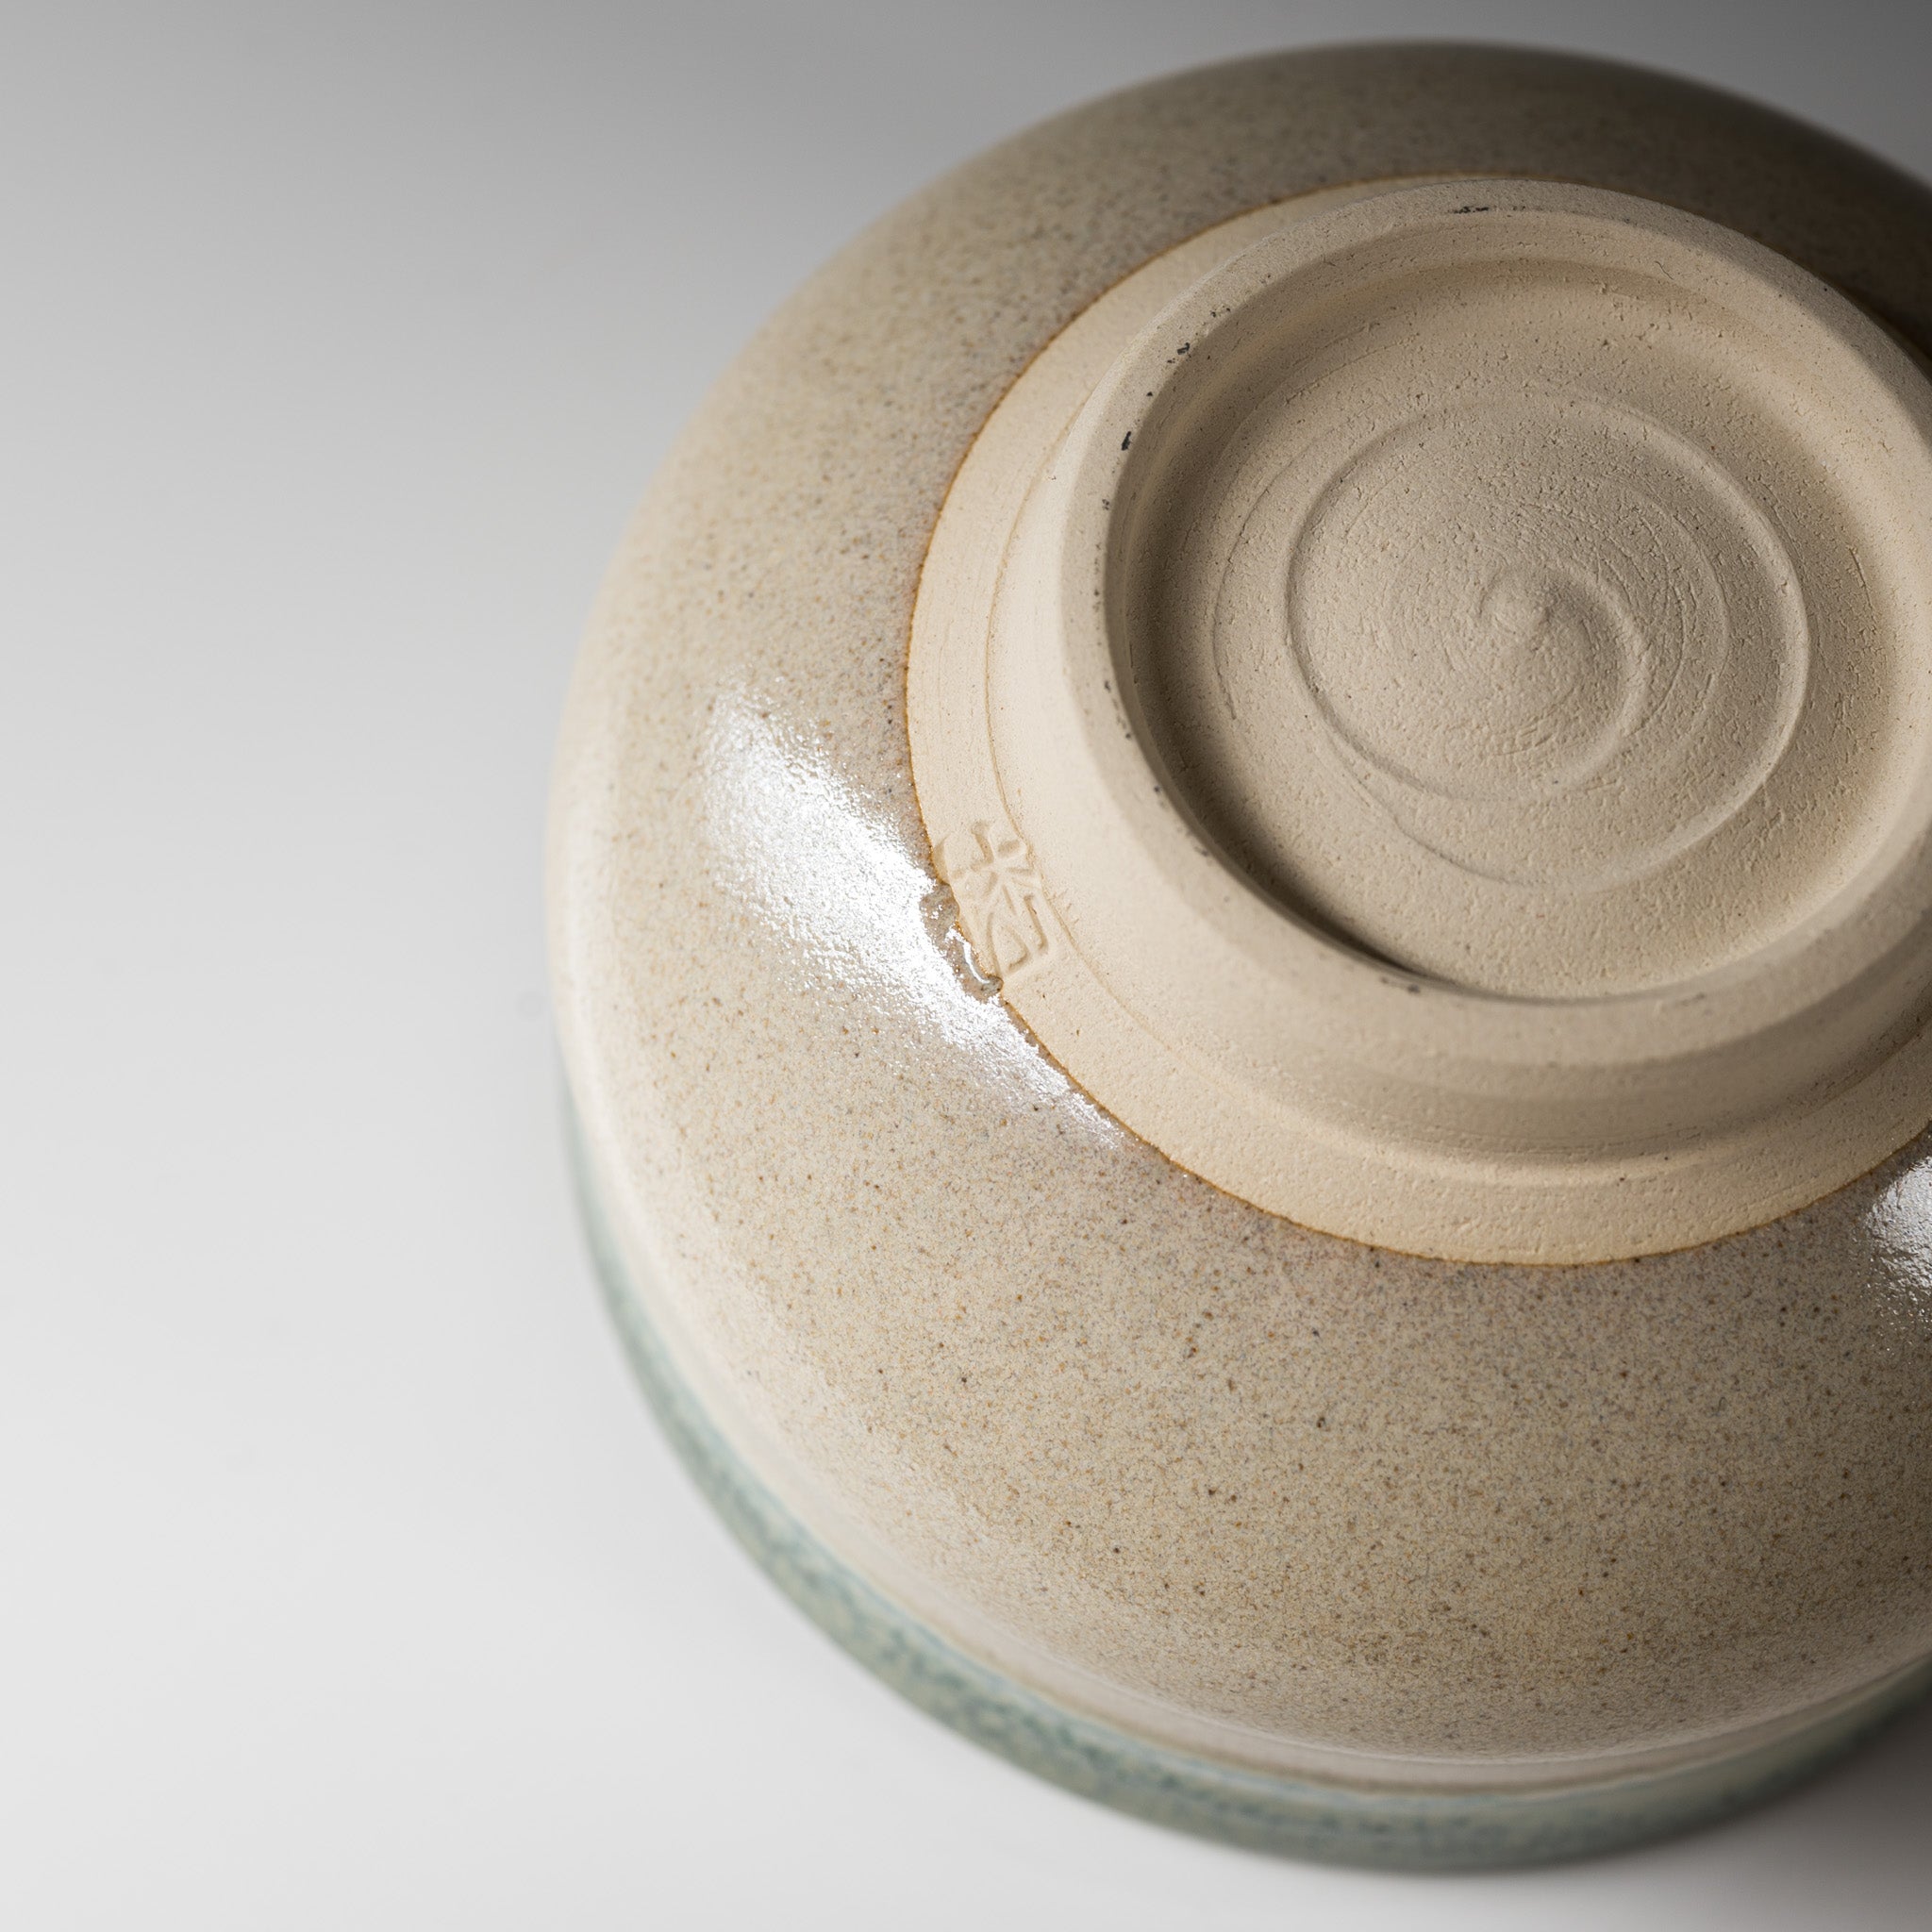 Kyo Kiyomizu Ware Handmade Matcha Bowl - Fuchioribe / 京焼・清水焼き 抹茶碗